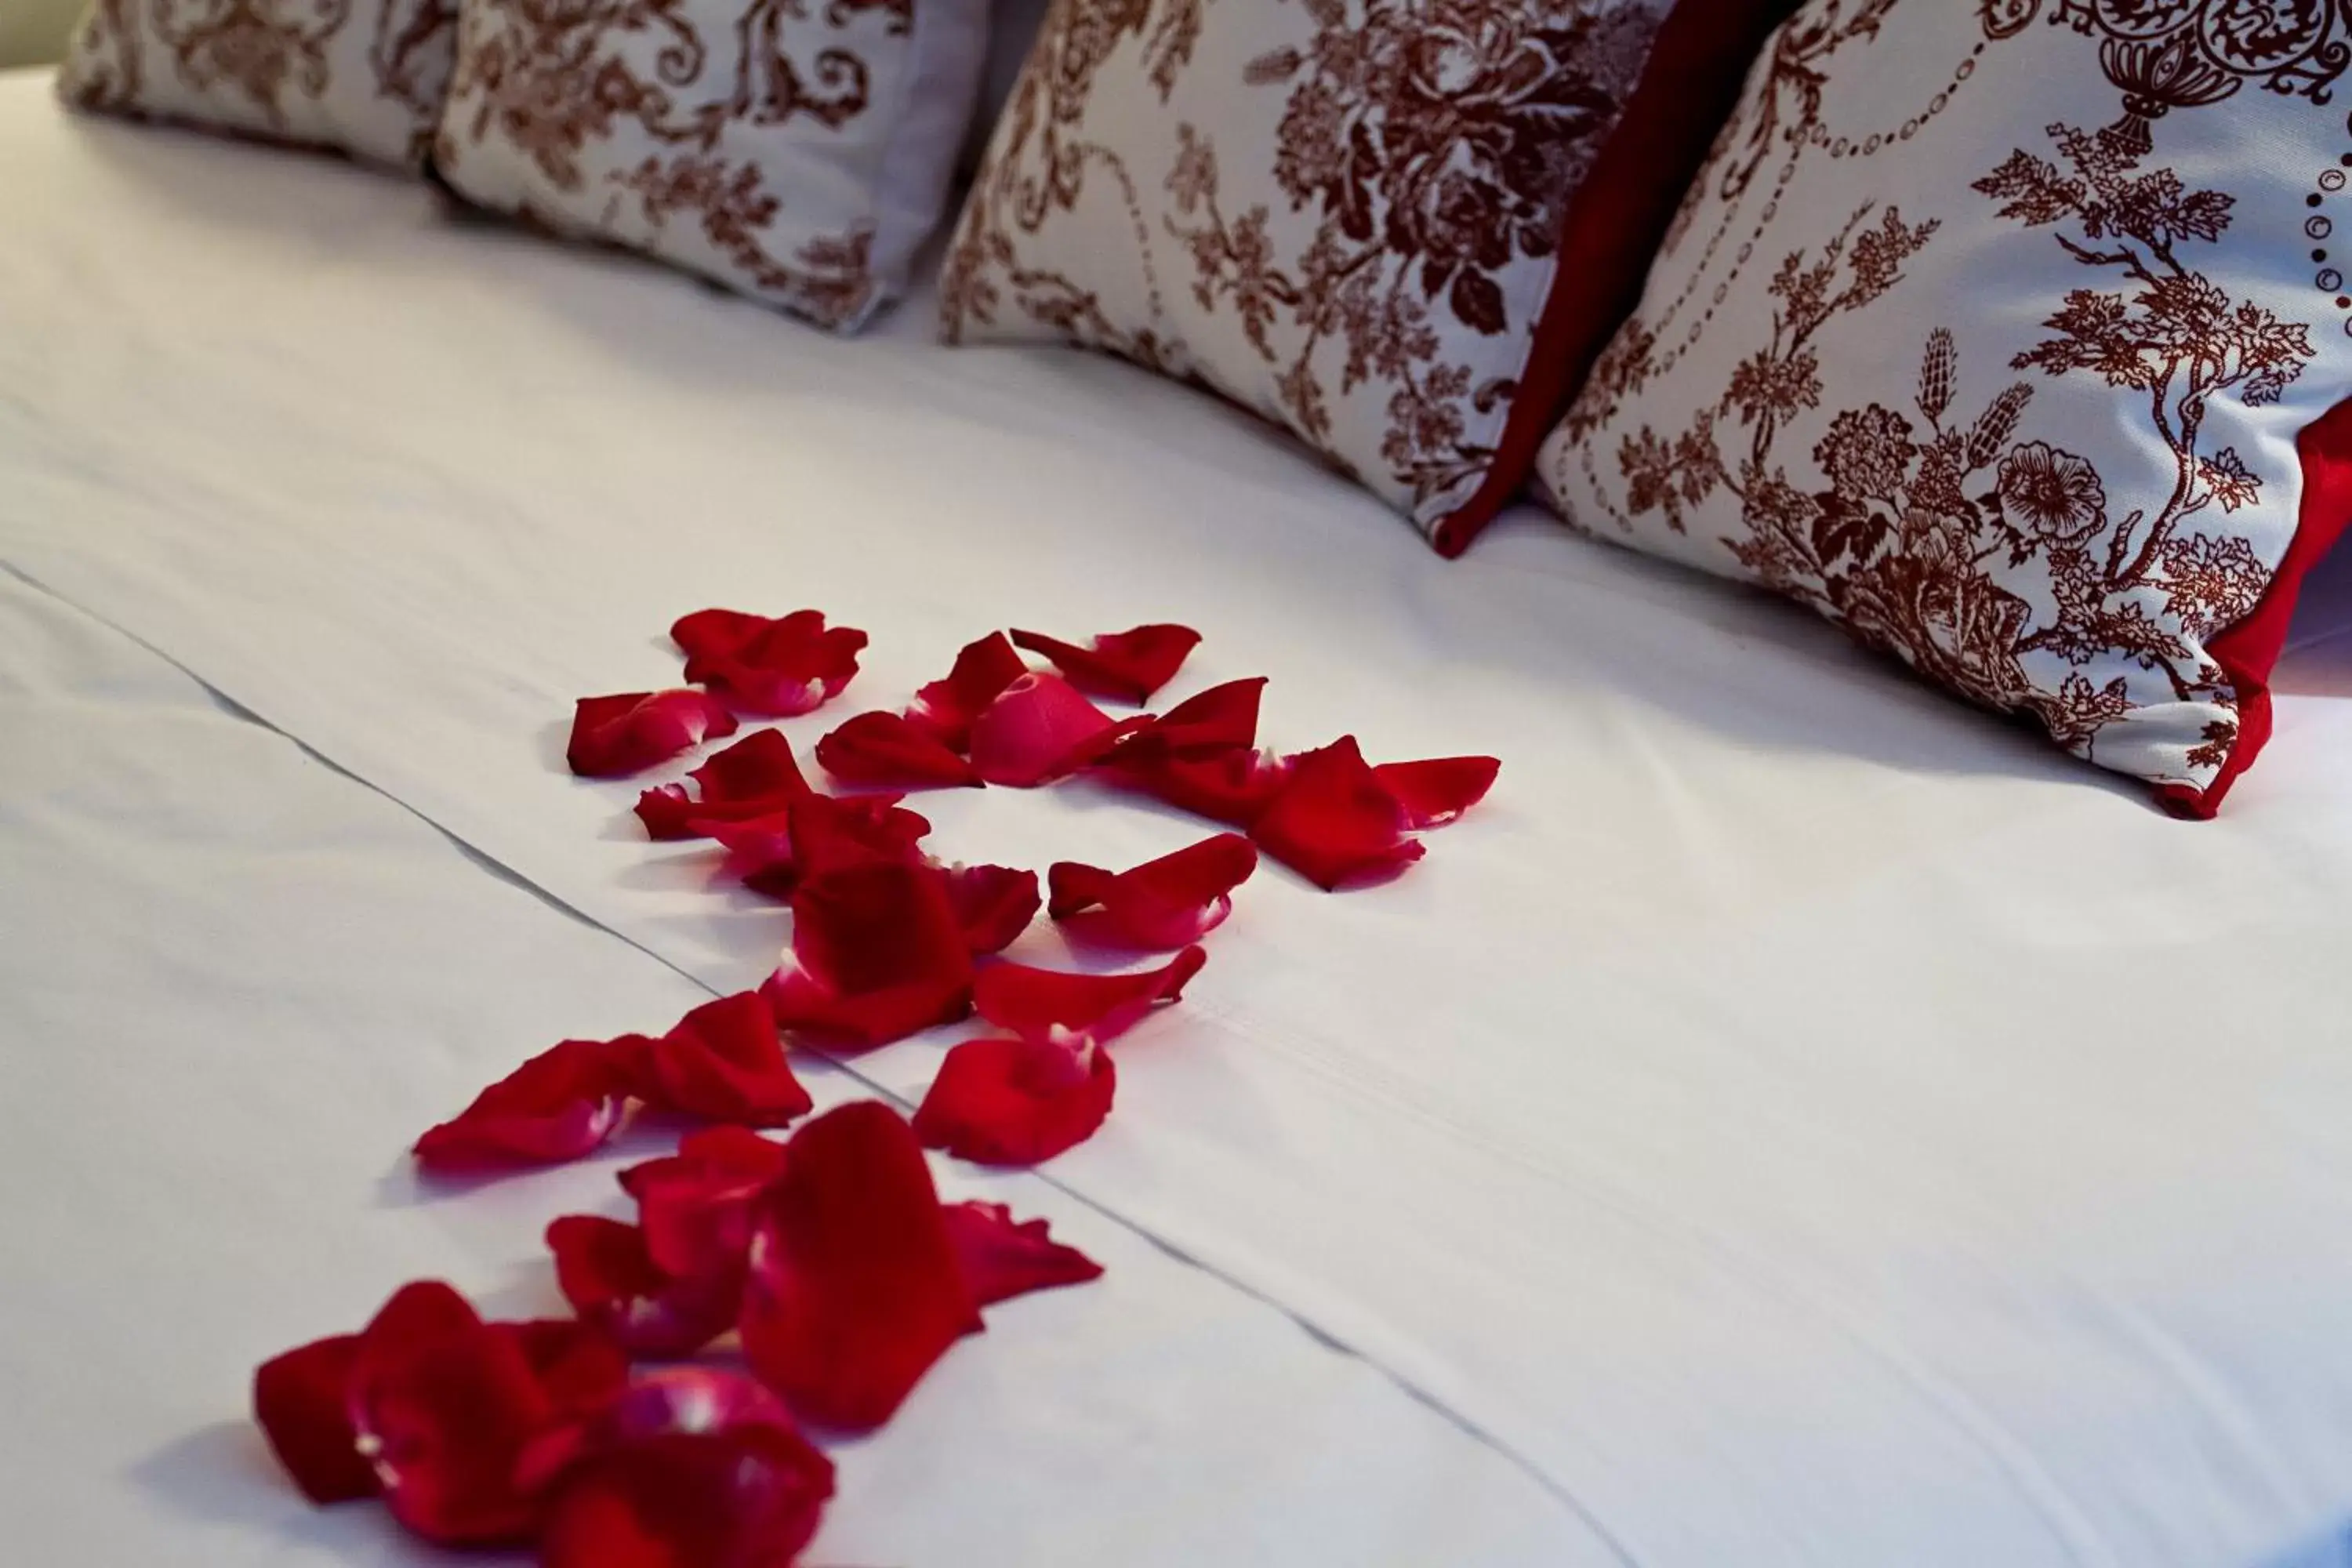 Bed in Ribera Sur Hotel